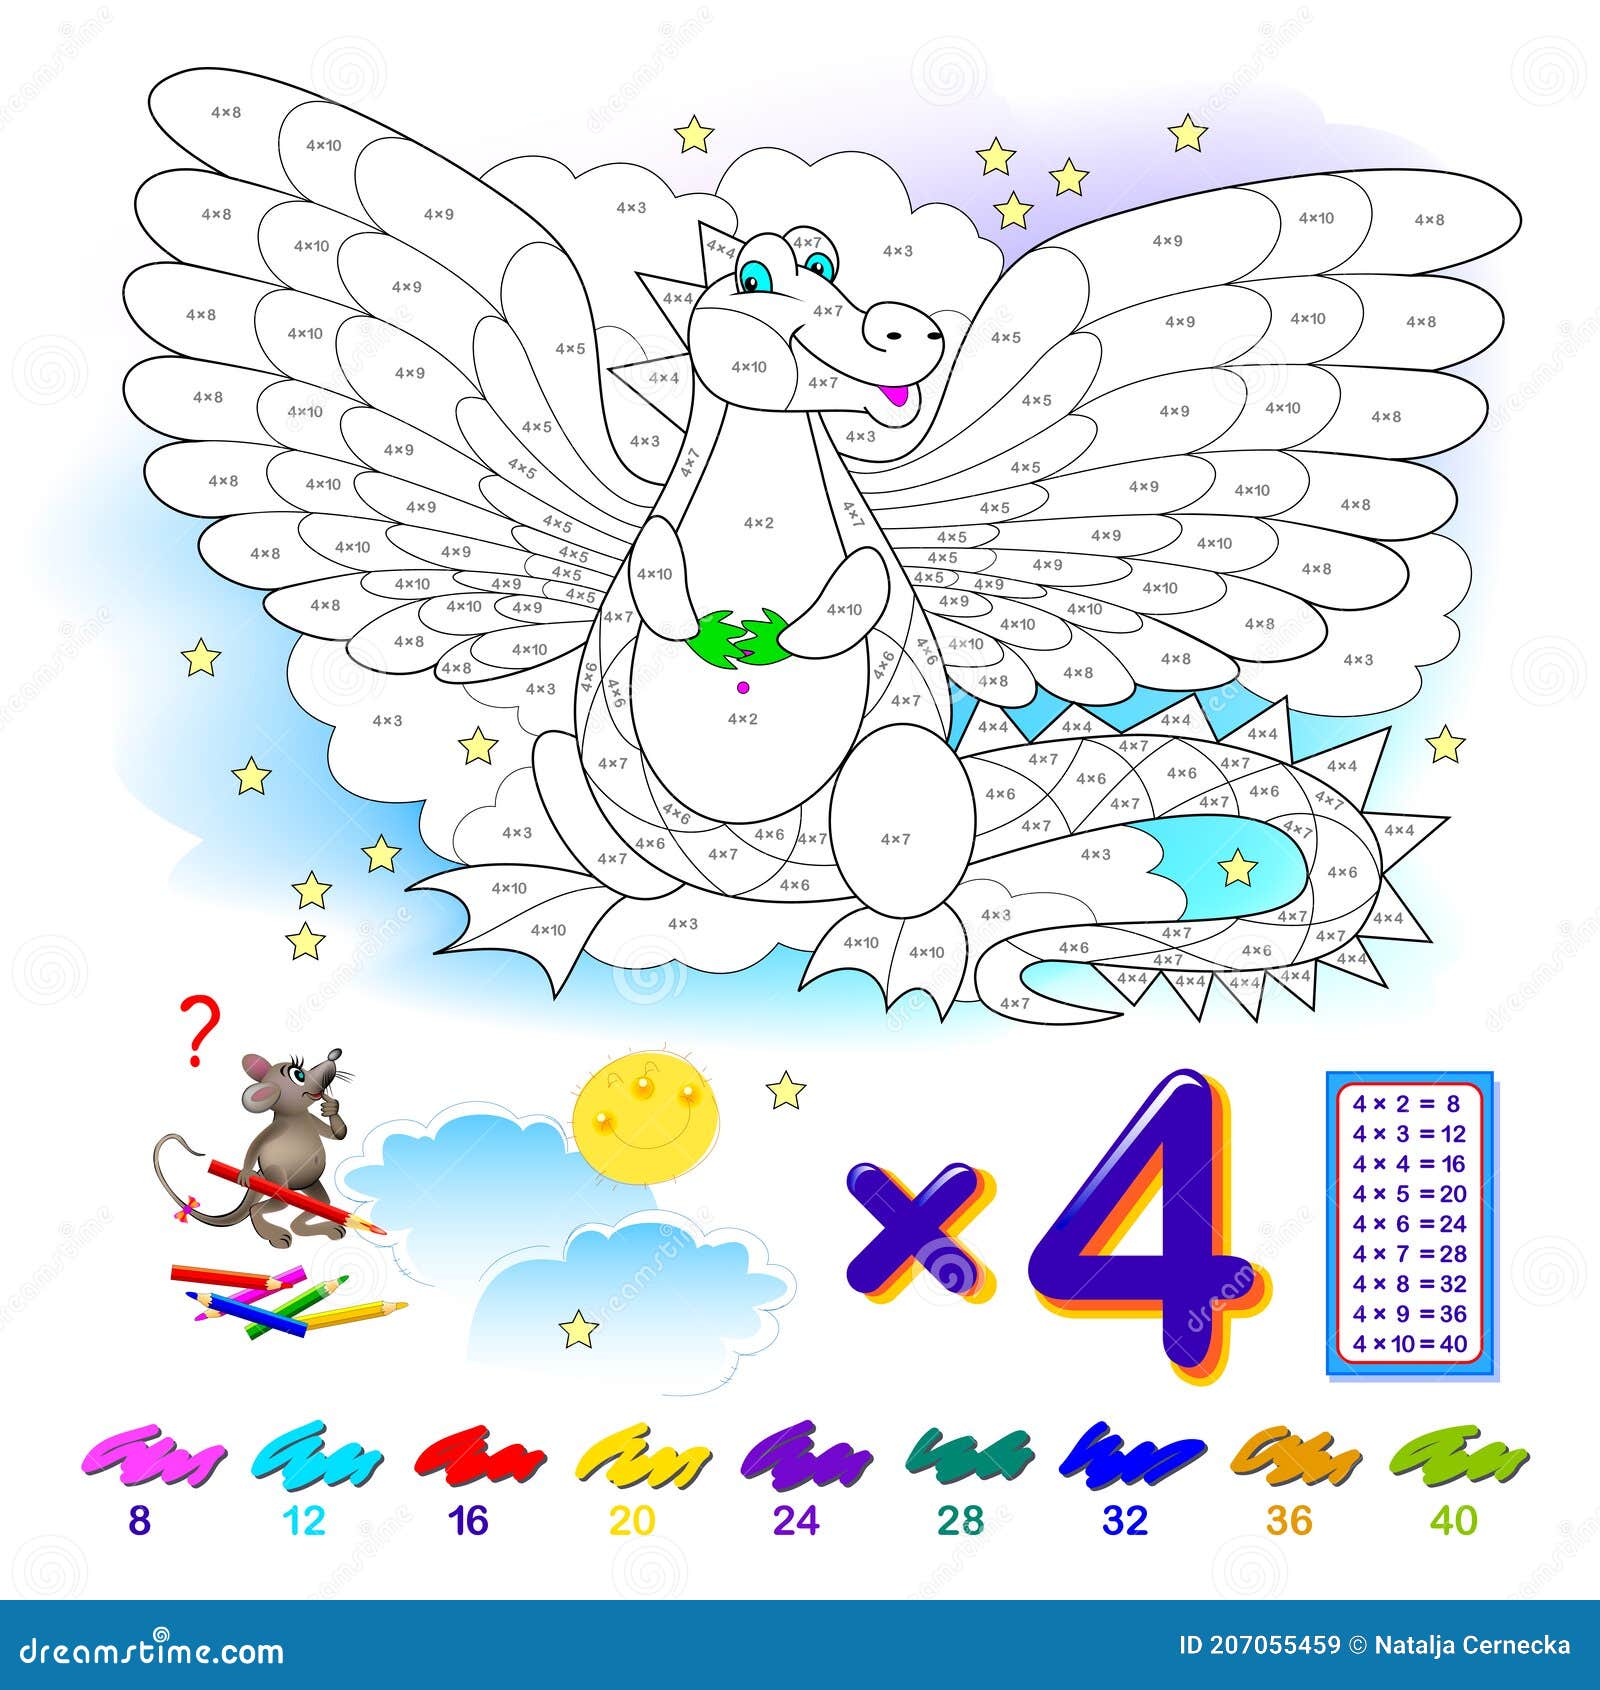 100 Desenhos para Adultos Colorir e Imprimir - Online Cursos Gratuitos   Dibujos para colorear, Imprimir dibujos para colorear, Mandalas para  colorear animales